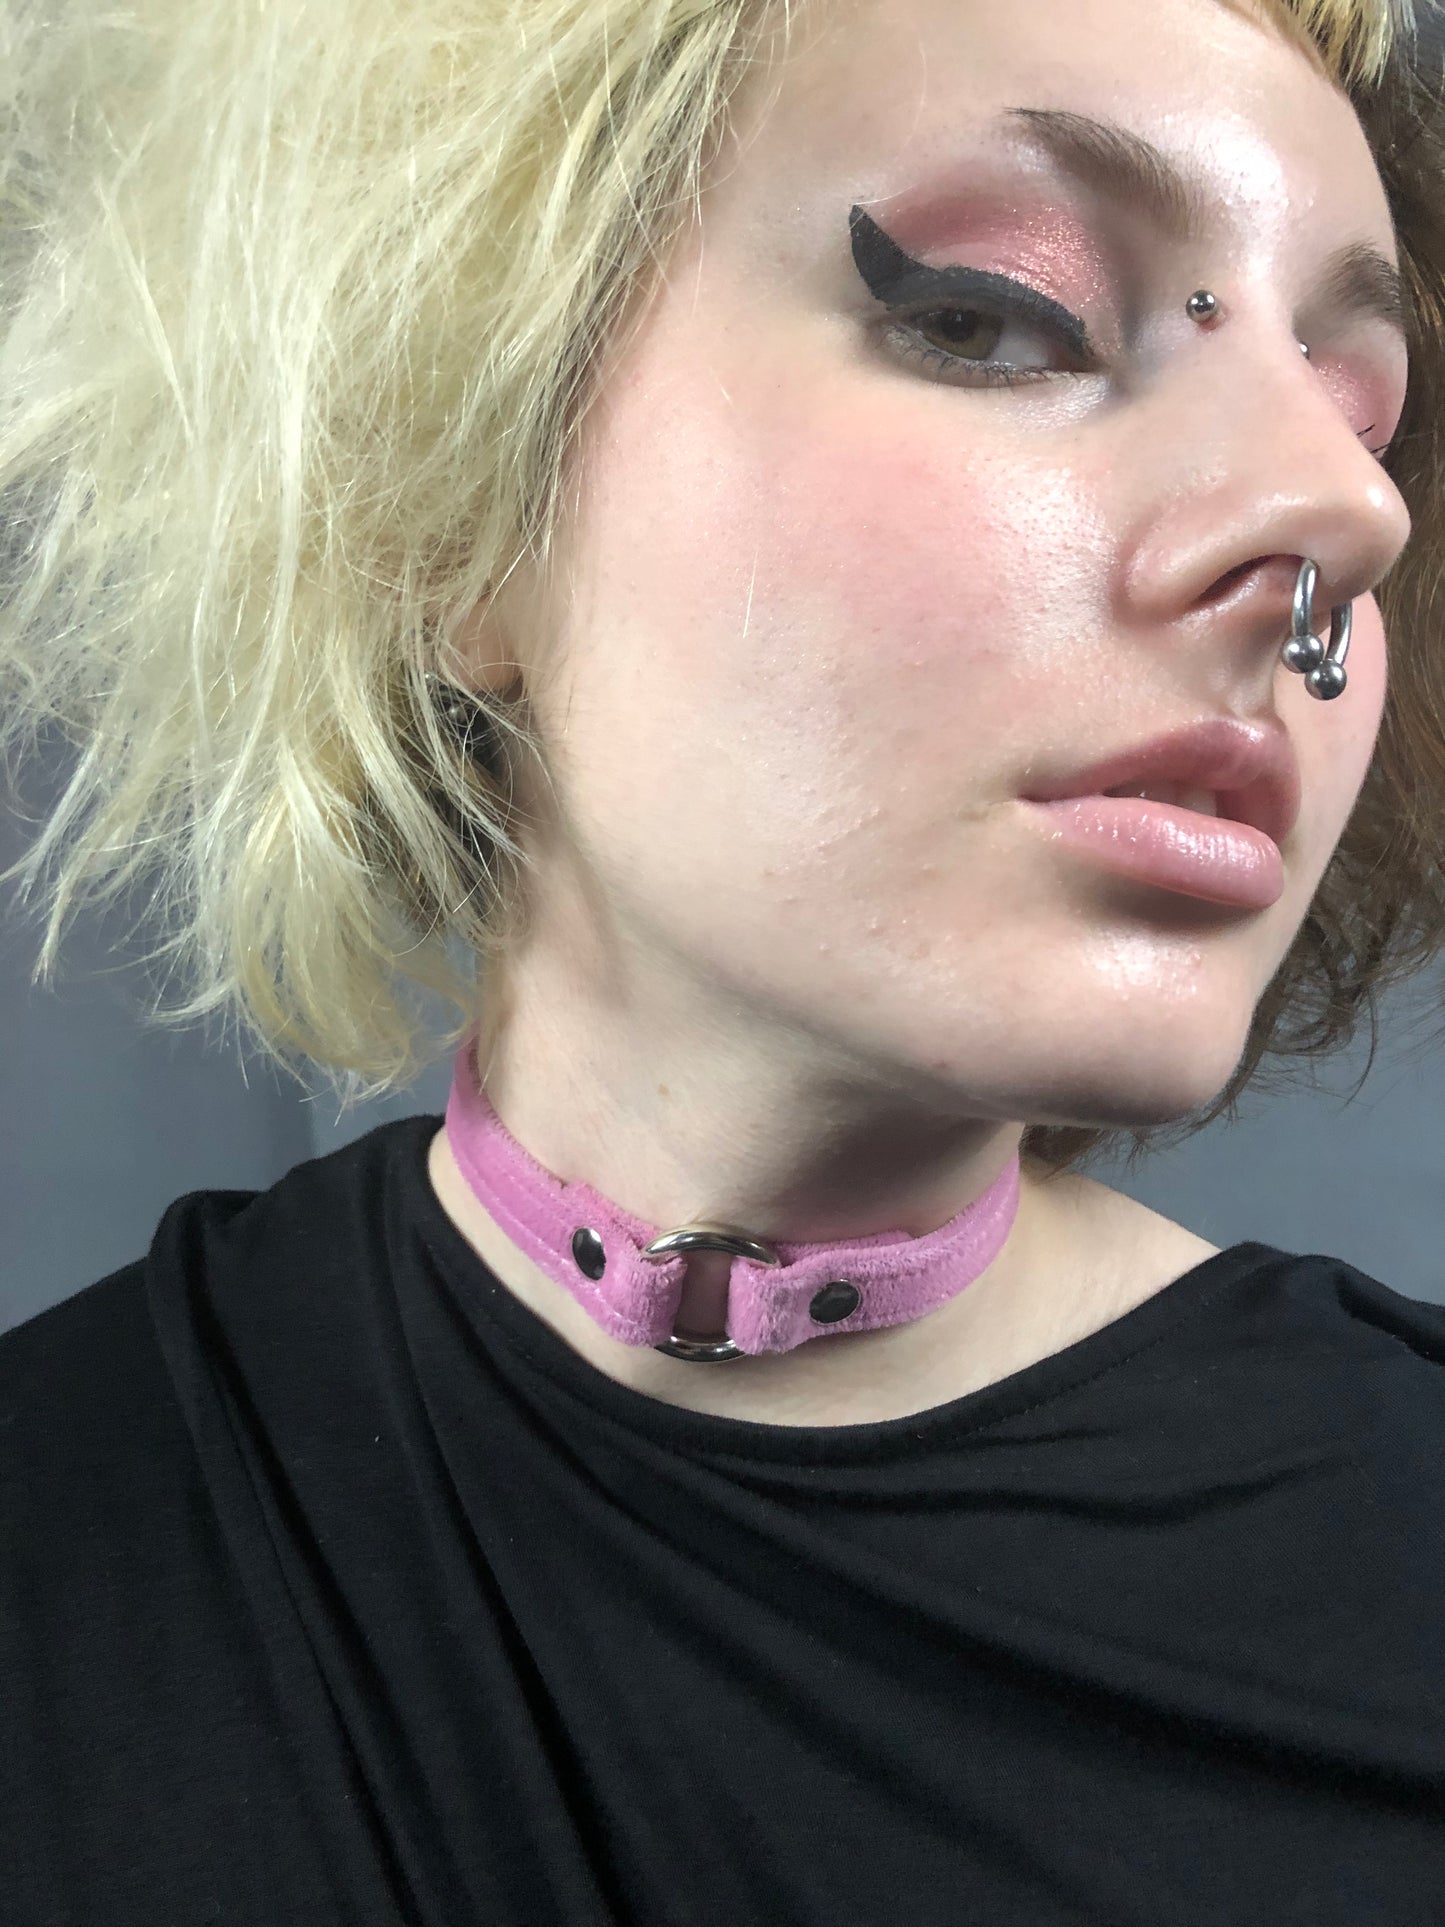 A model with facial piercings, wears a pink Velvet Choker.